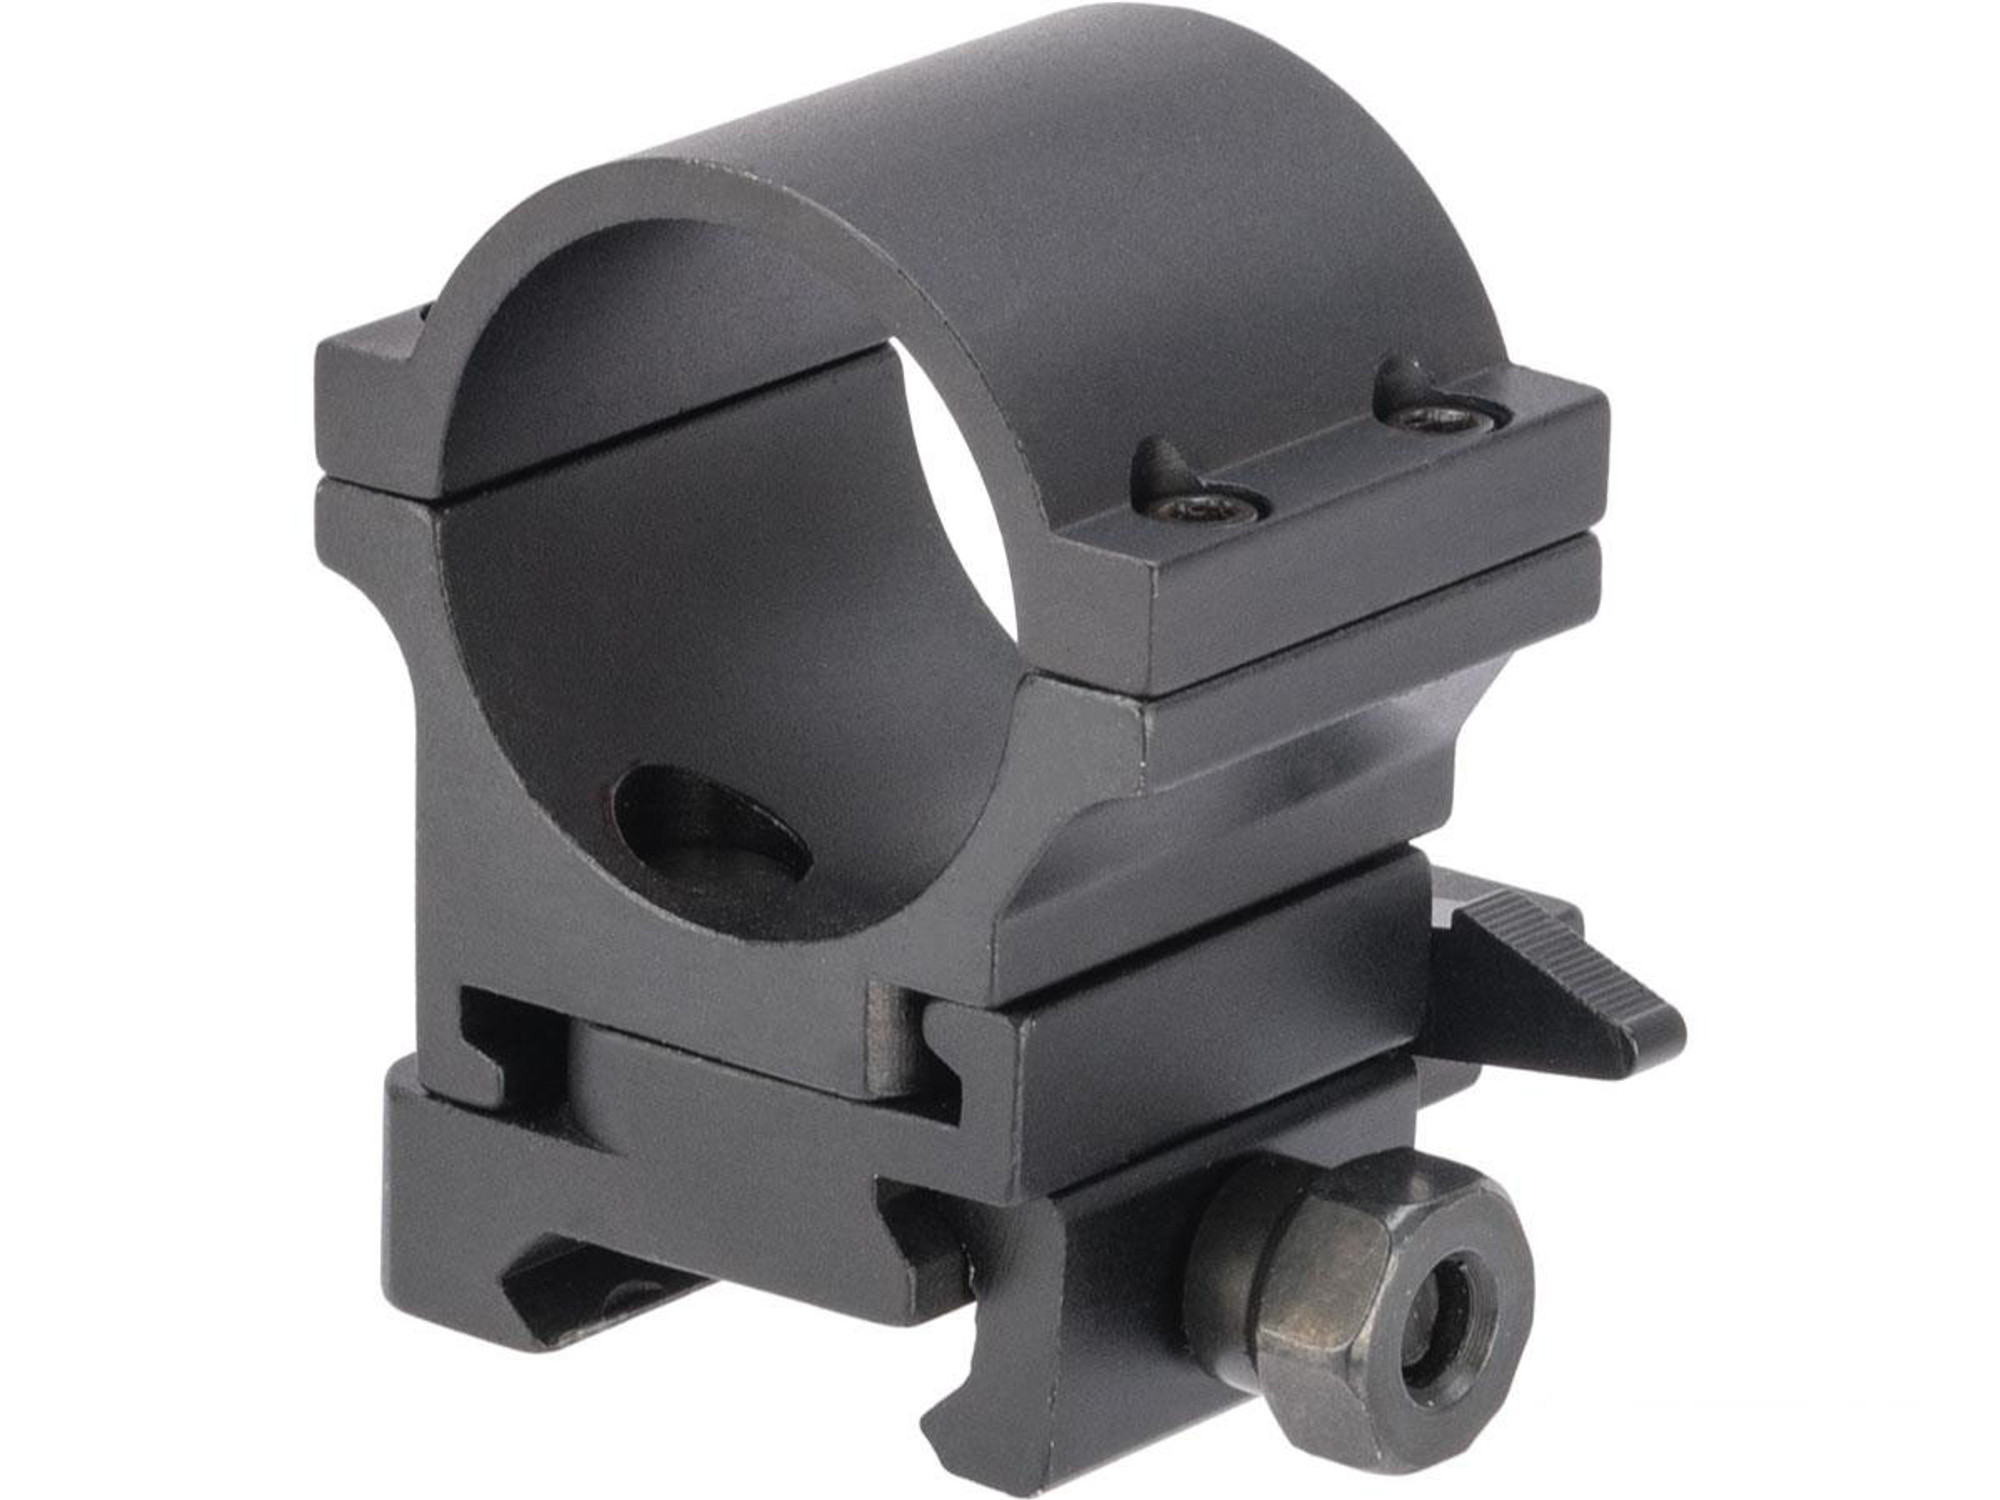 G&P 30mm Quick-Lock QD Twist Mount for Magnifier Scopes